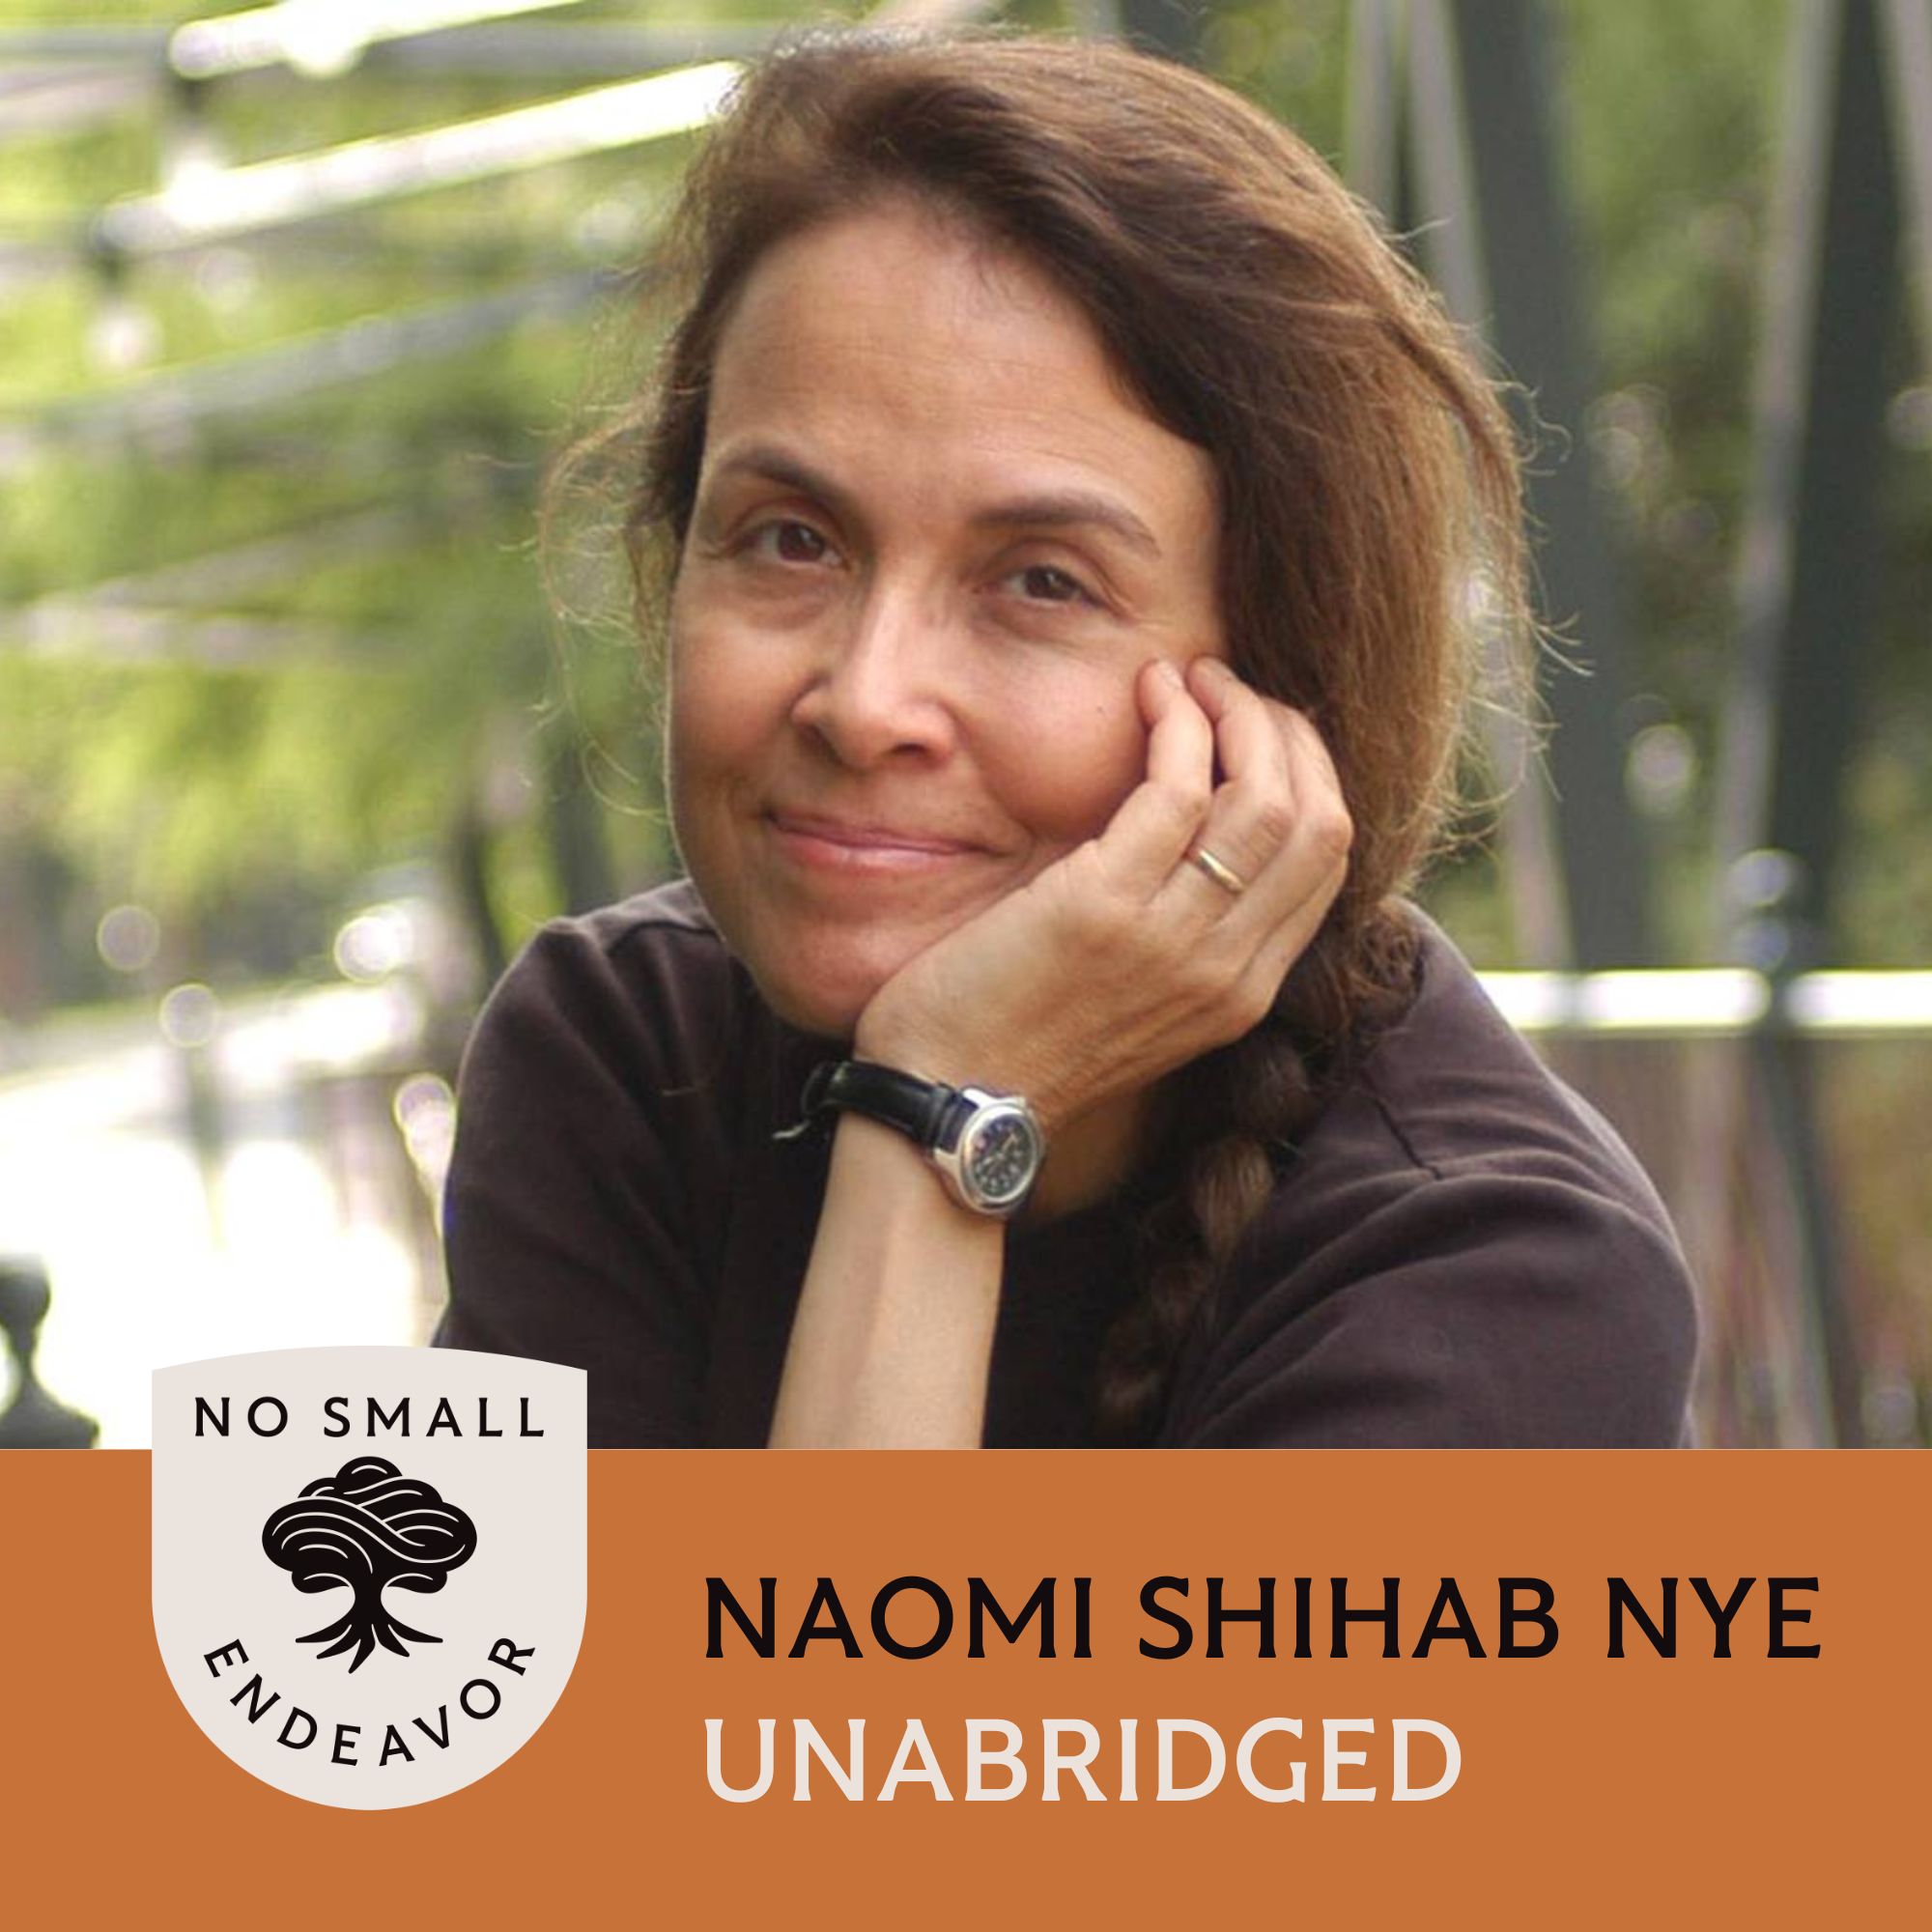 Thumbnail for "158: Unabridged Interview: Naomi Shihab Nye".